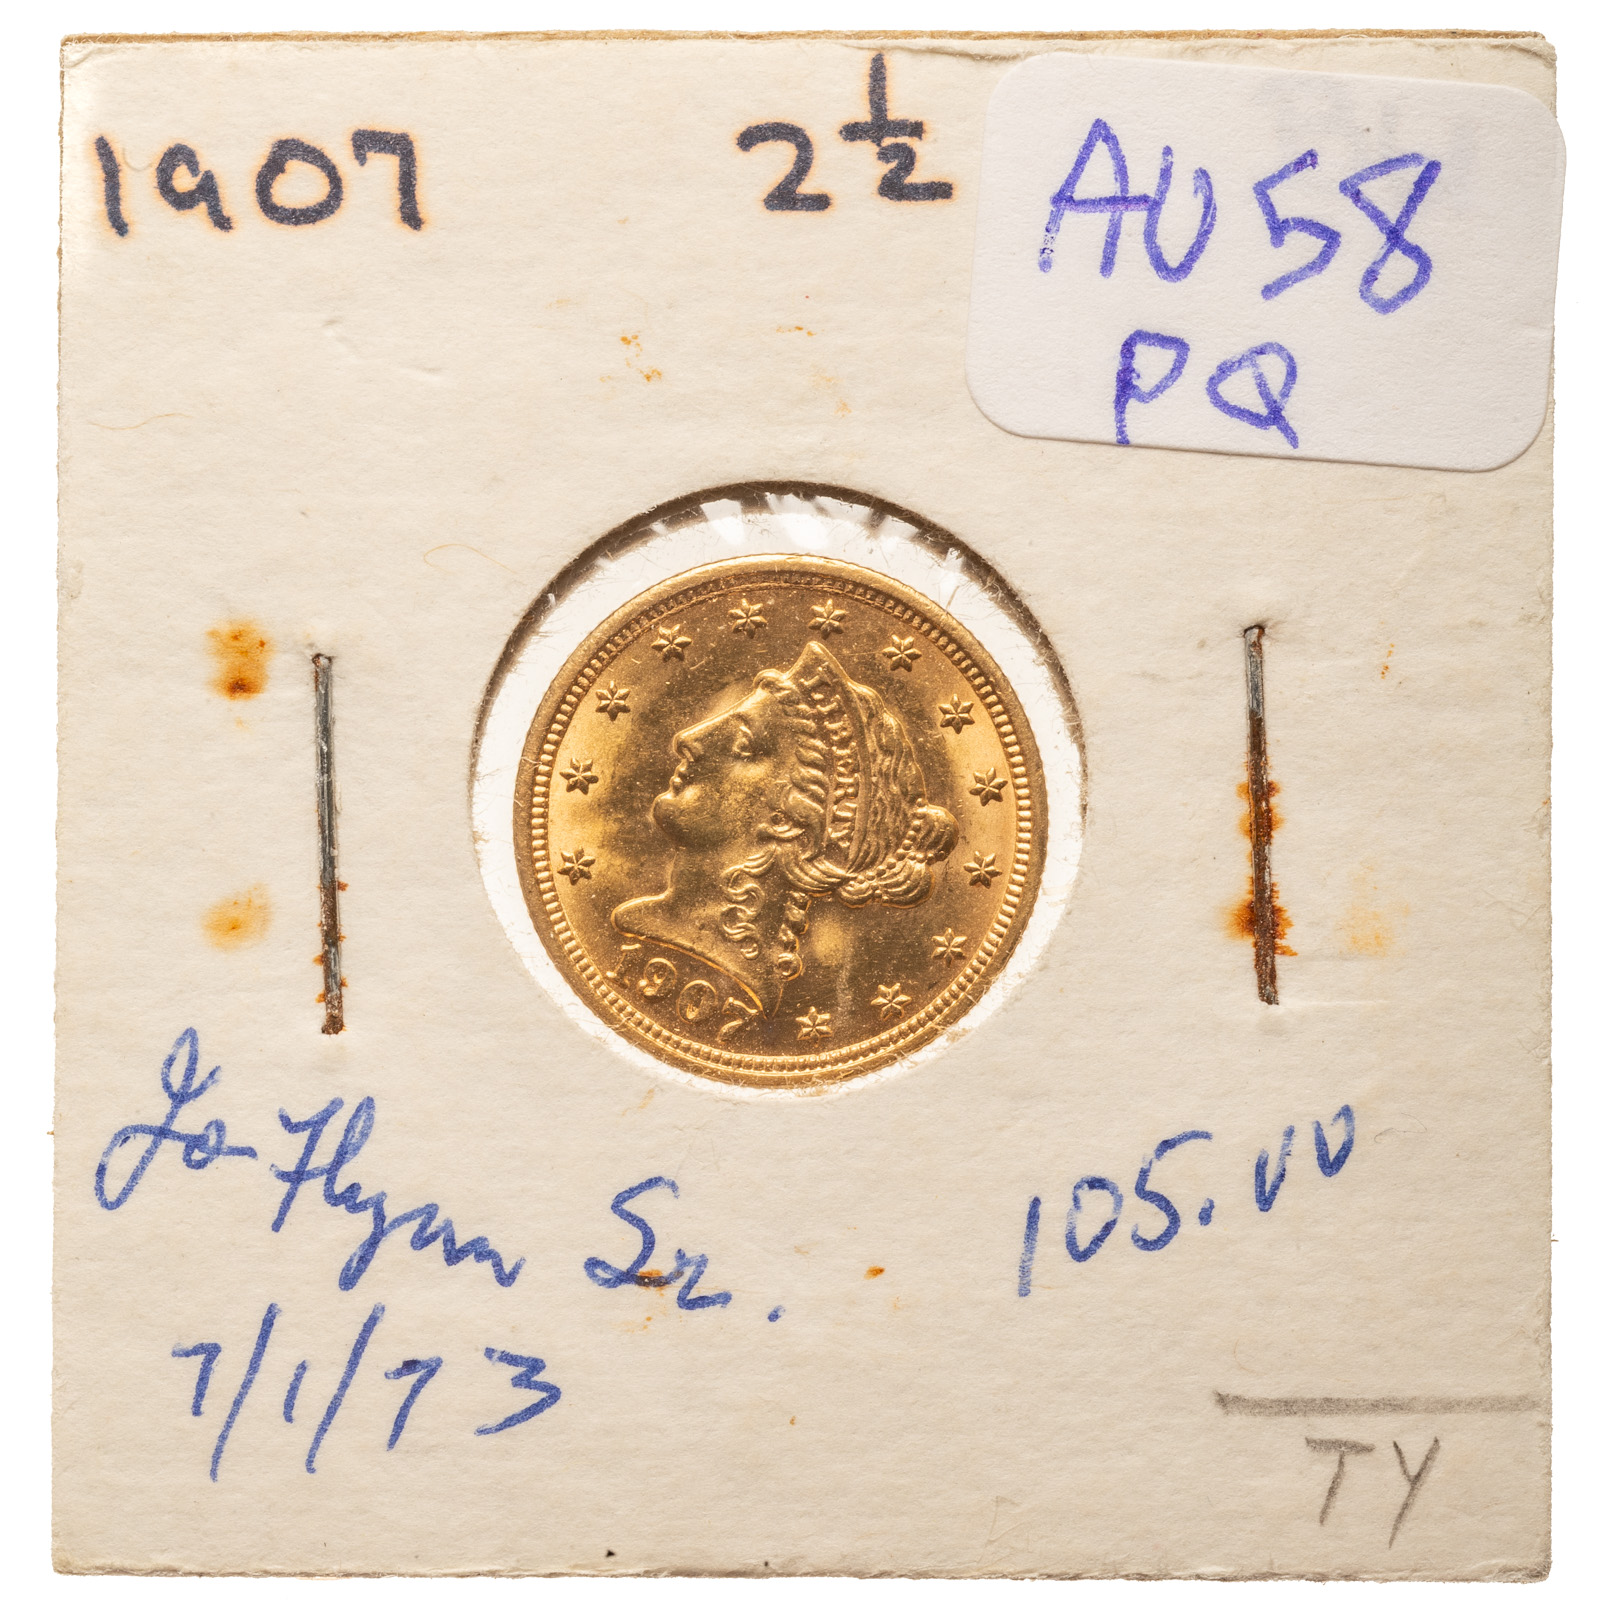 1907 2 50 LIBERTY GOLD QUARTER 2eae1c